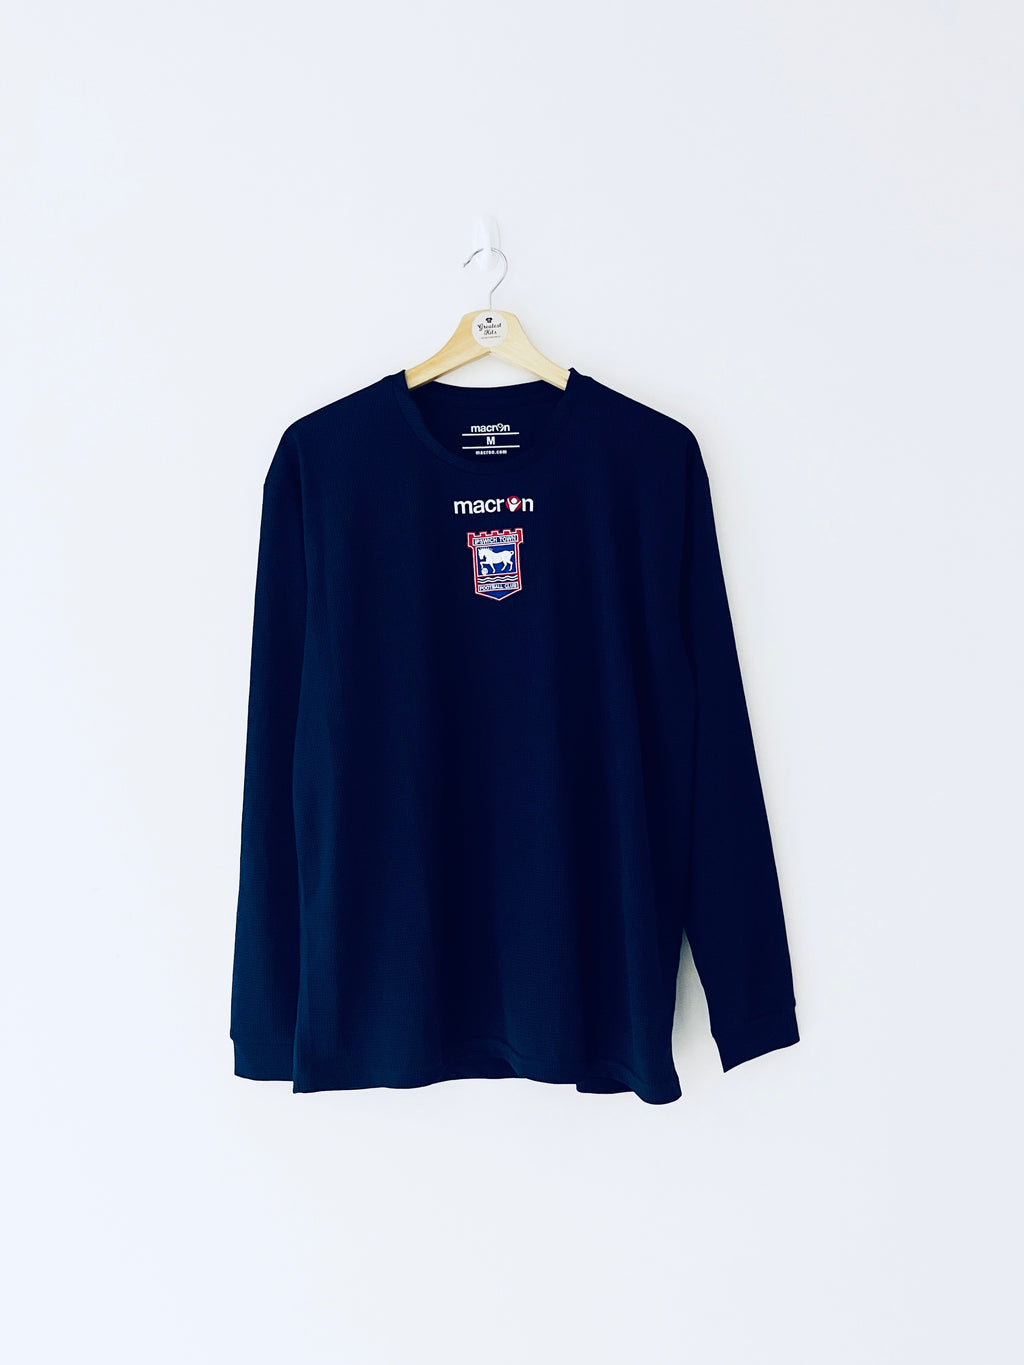 2019/20 Ipswich Town L/S Training Shirt (M) 9/10